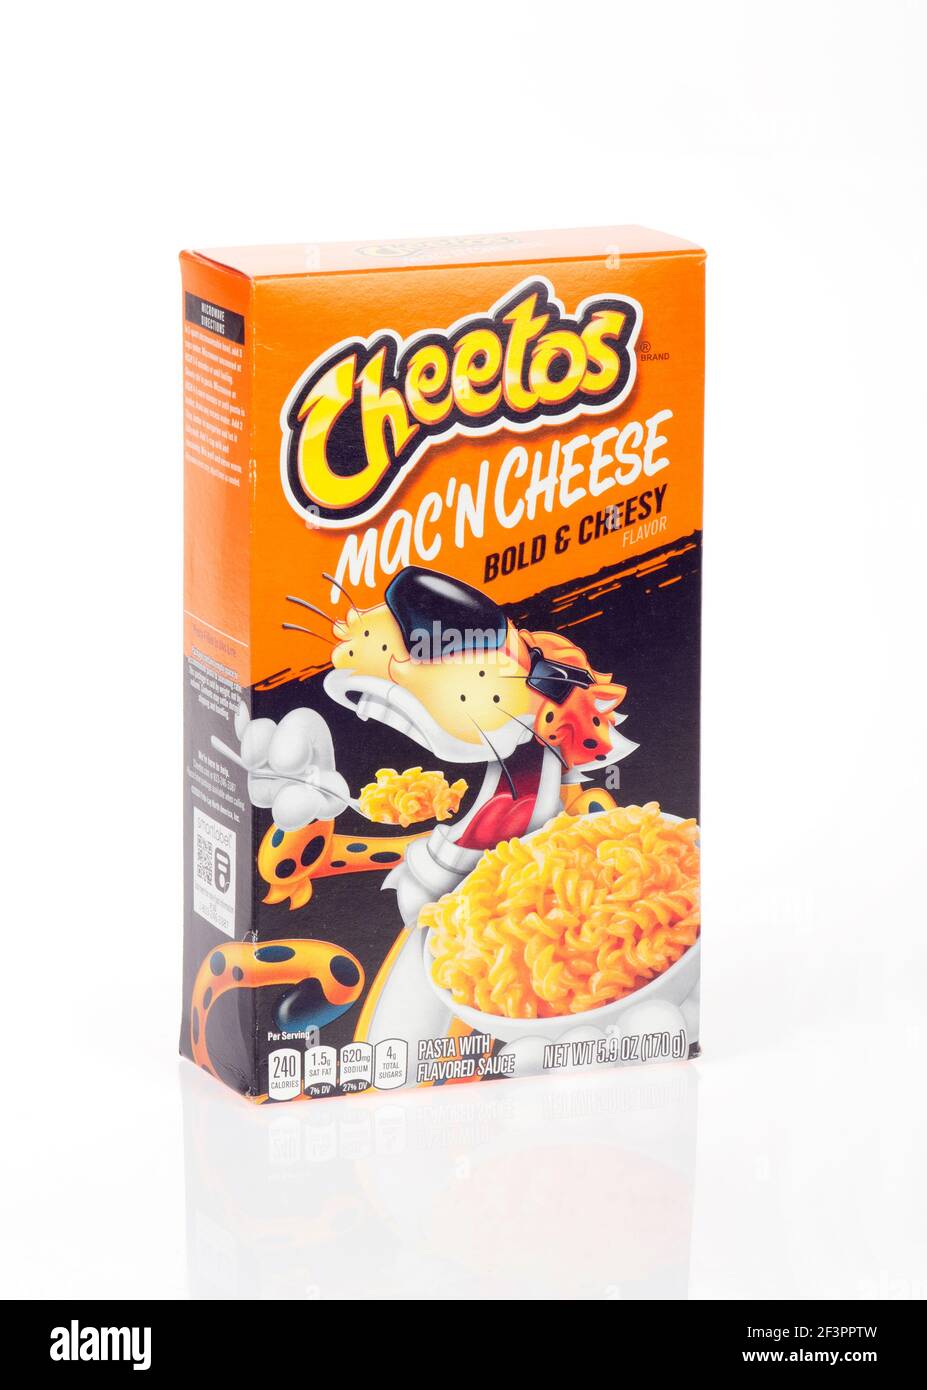 Cheetos Mac & Cheese Pasta Box audace & Cheesy Foto Stock